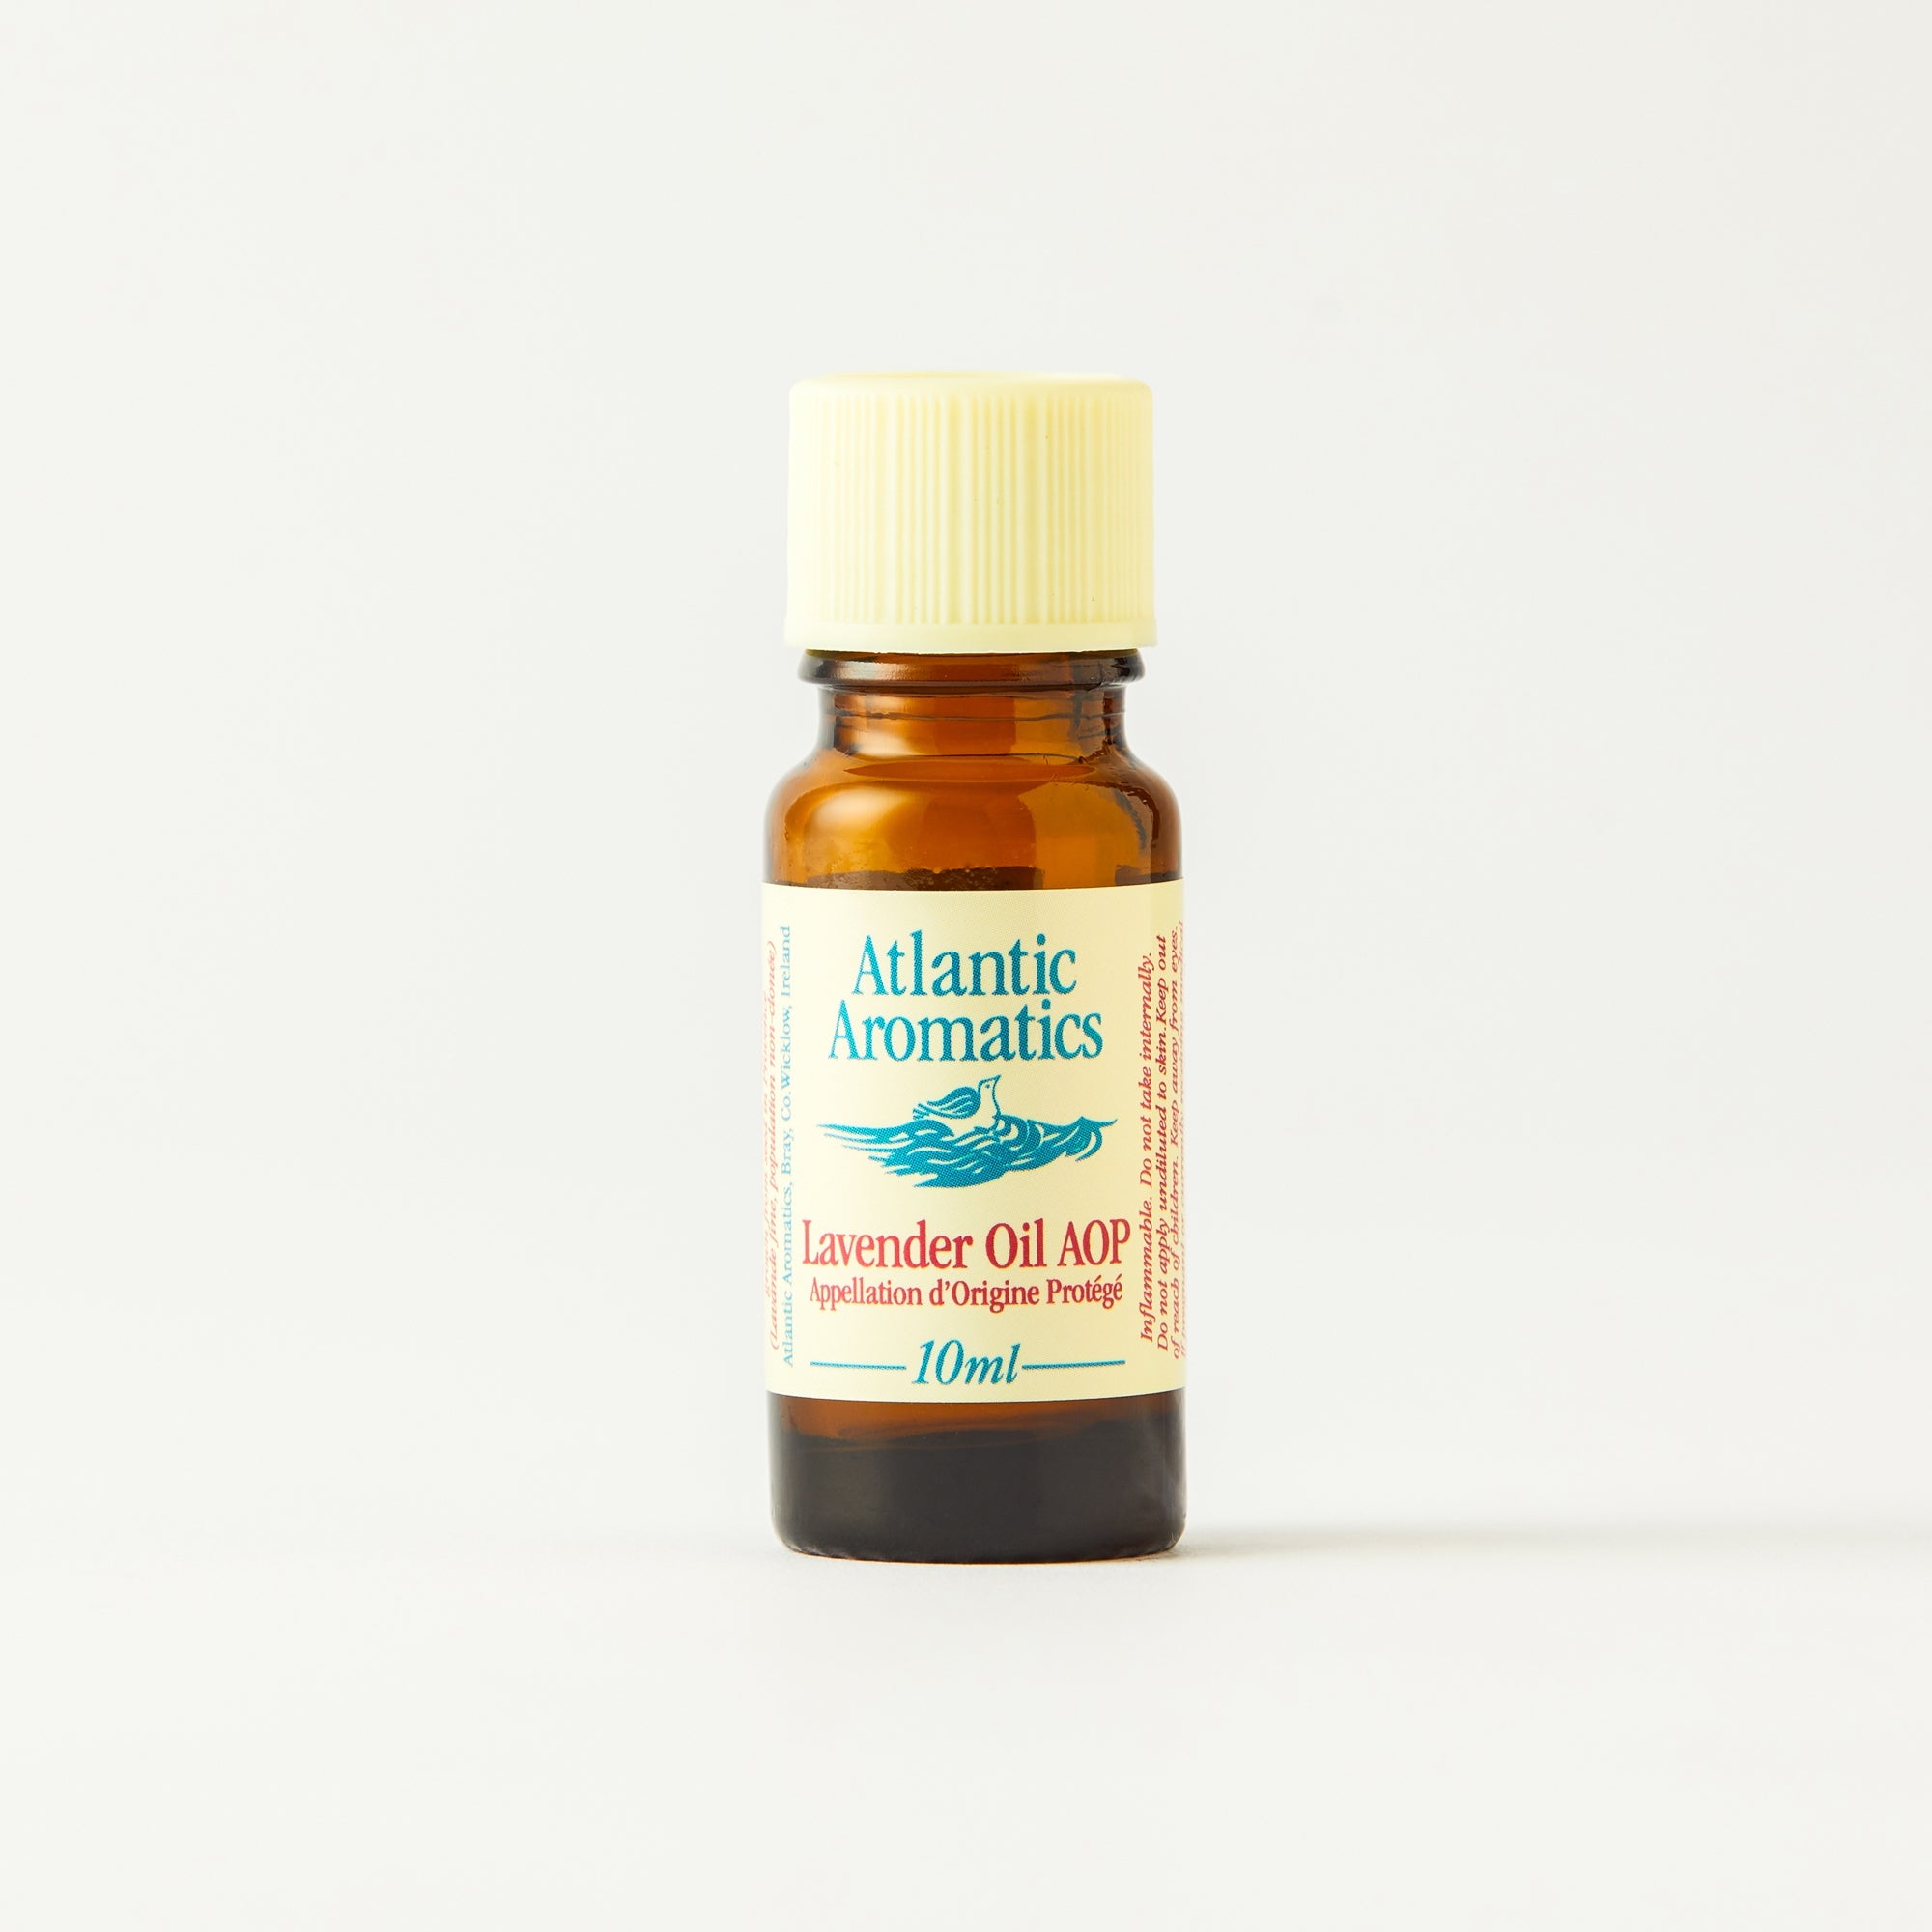 Atlantic Aromatics Lavender Oil AOP Appellation d&